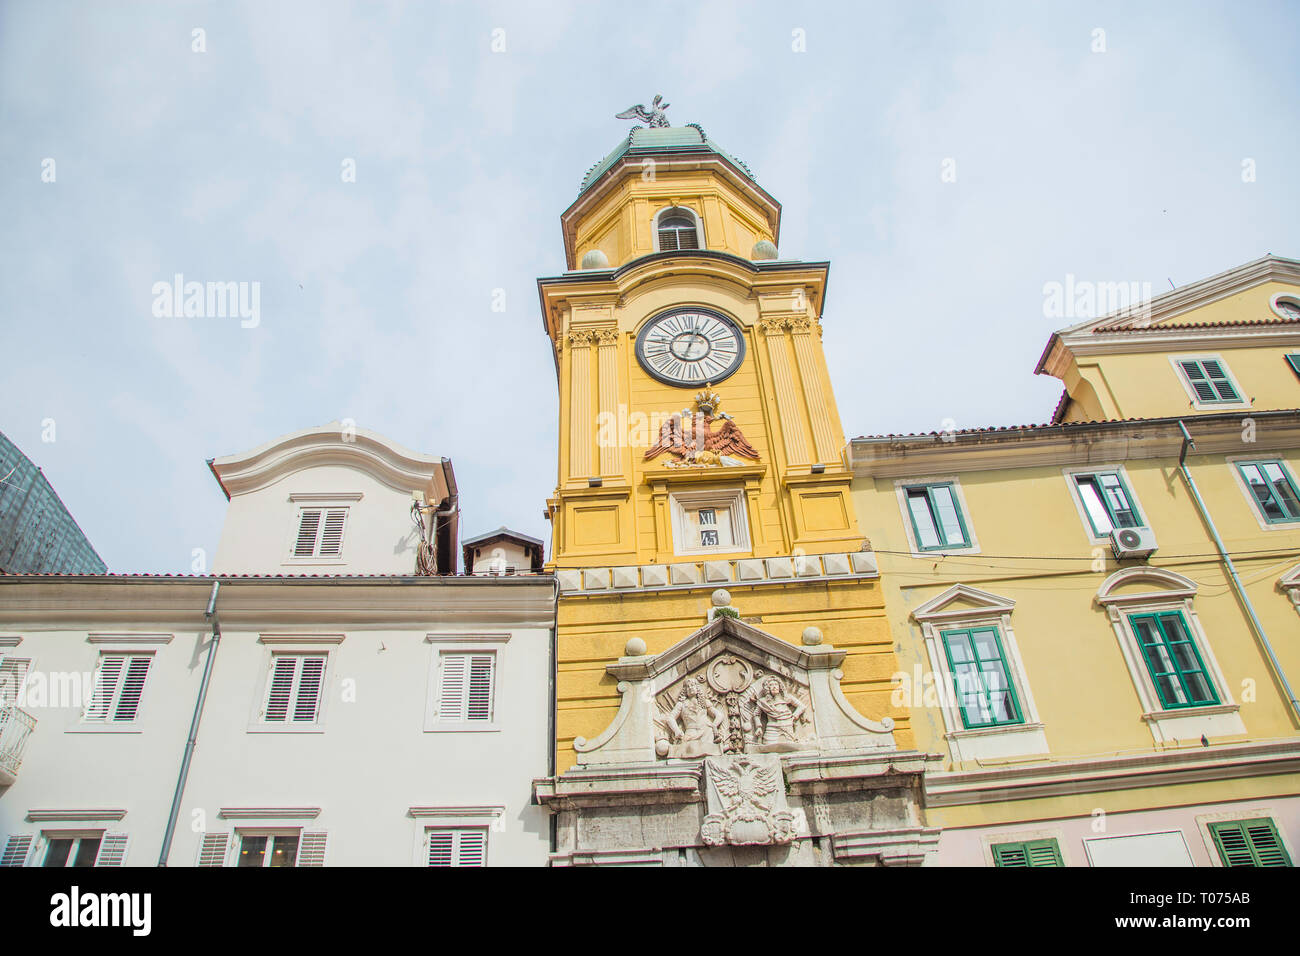 City of Rijeka, clock tower view in Croatia Stock Photo